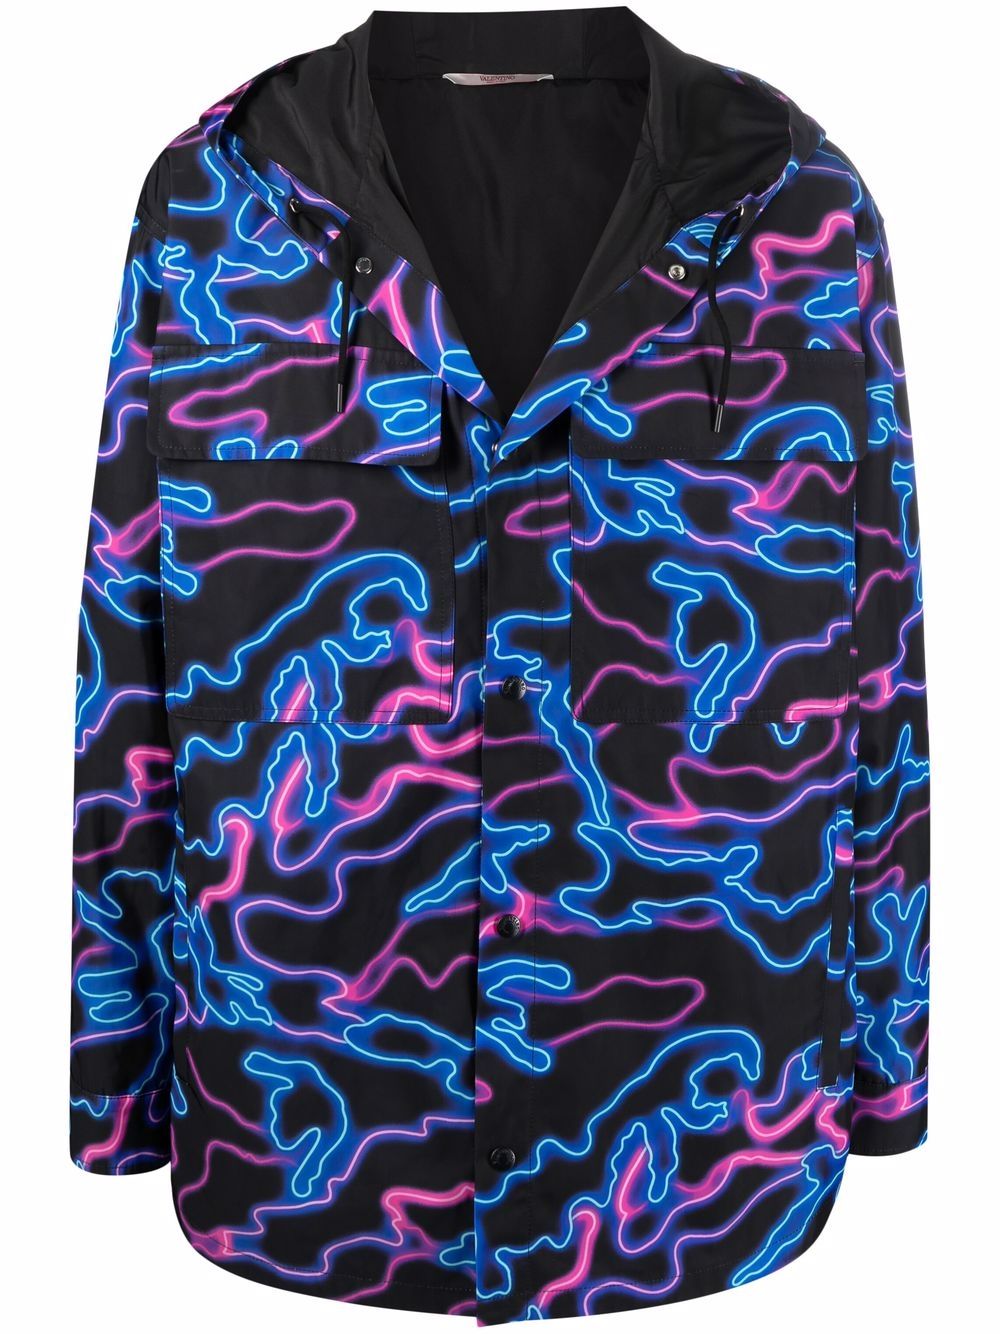 Neon Camou print hooded shirt jacket